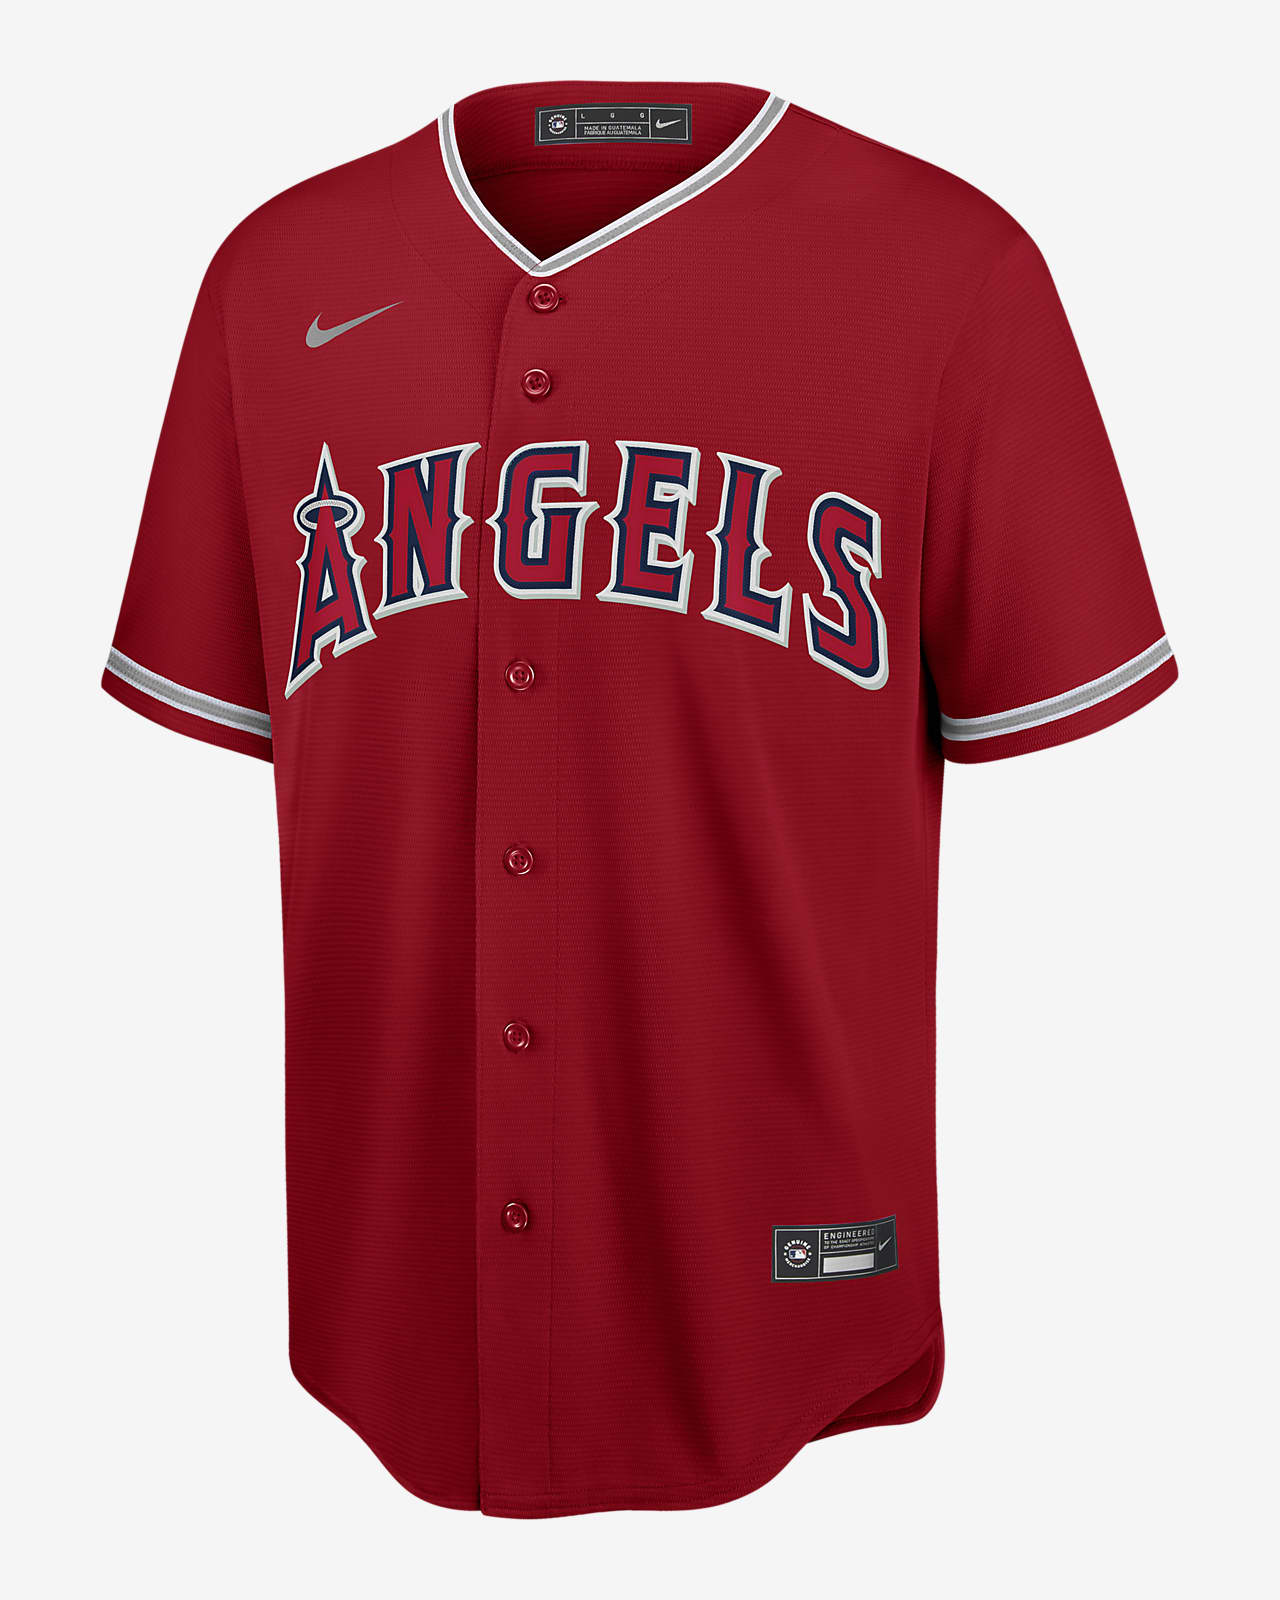 los angeles angels new uniforms